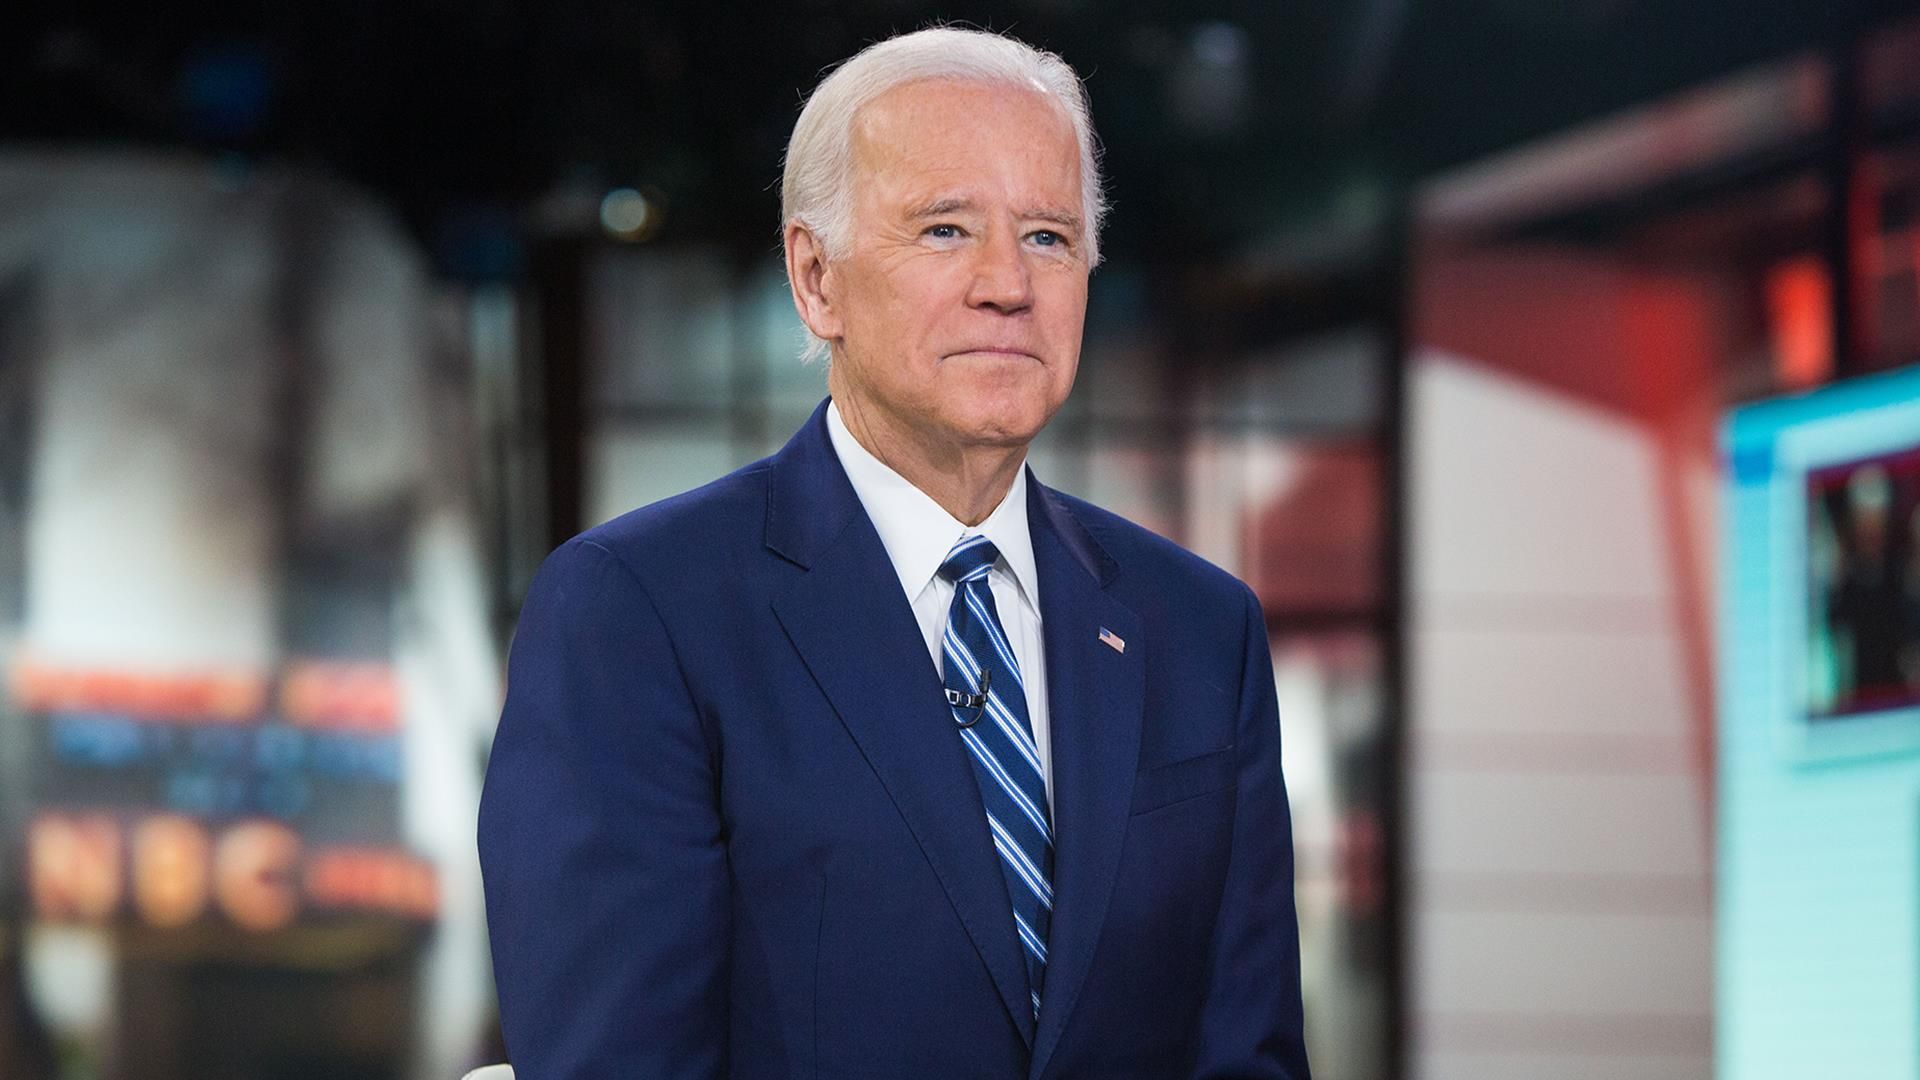 Joe Biden: 'I haven't made up my mind' on 2020 presidential bid